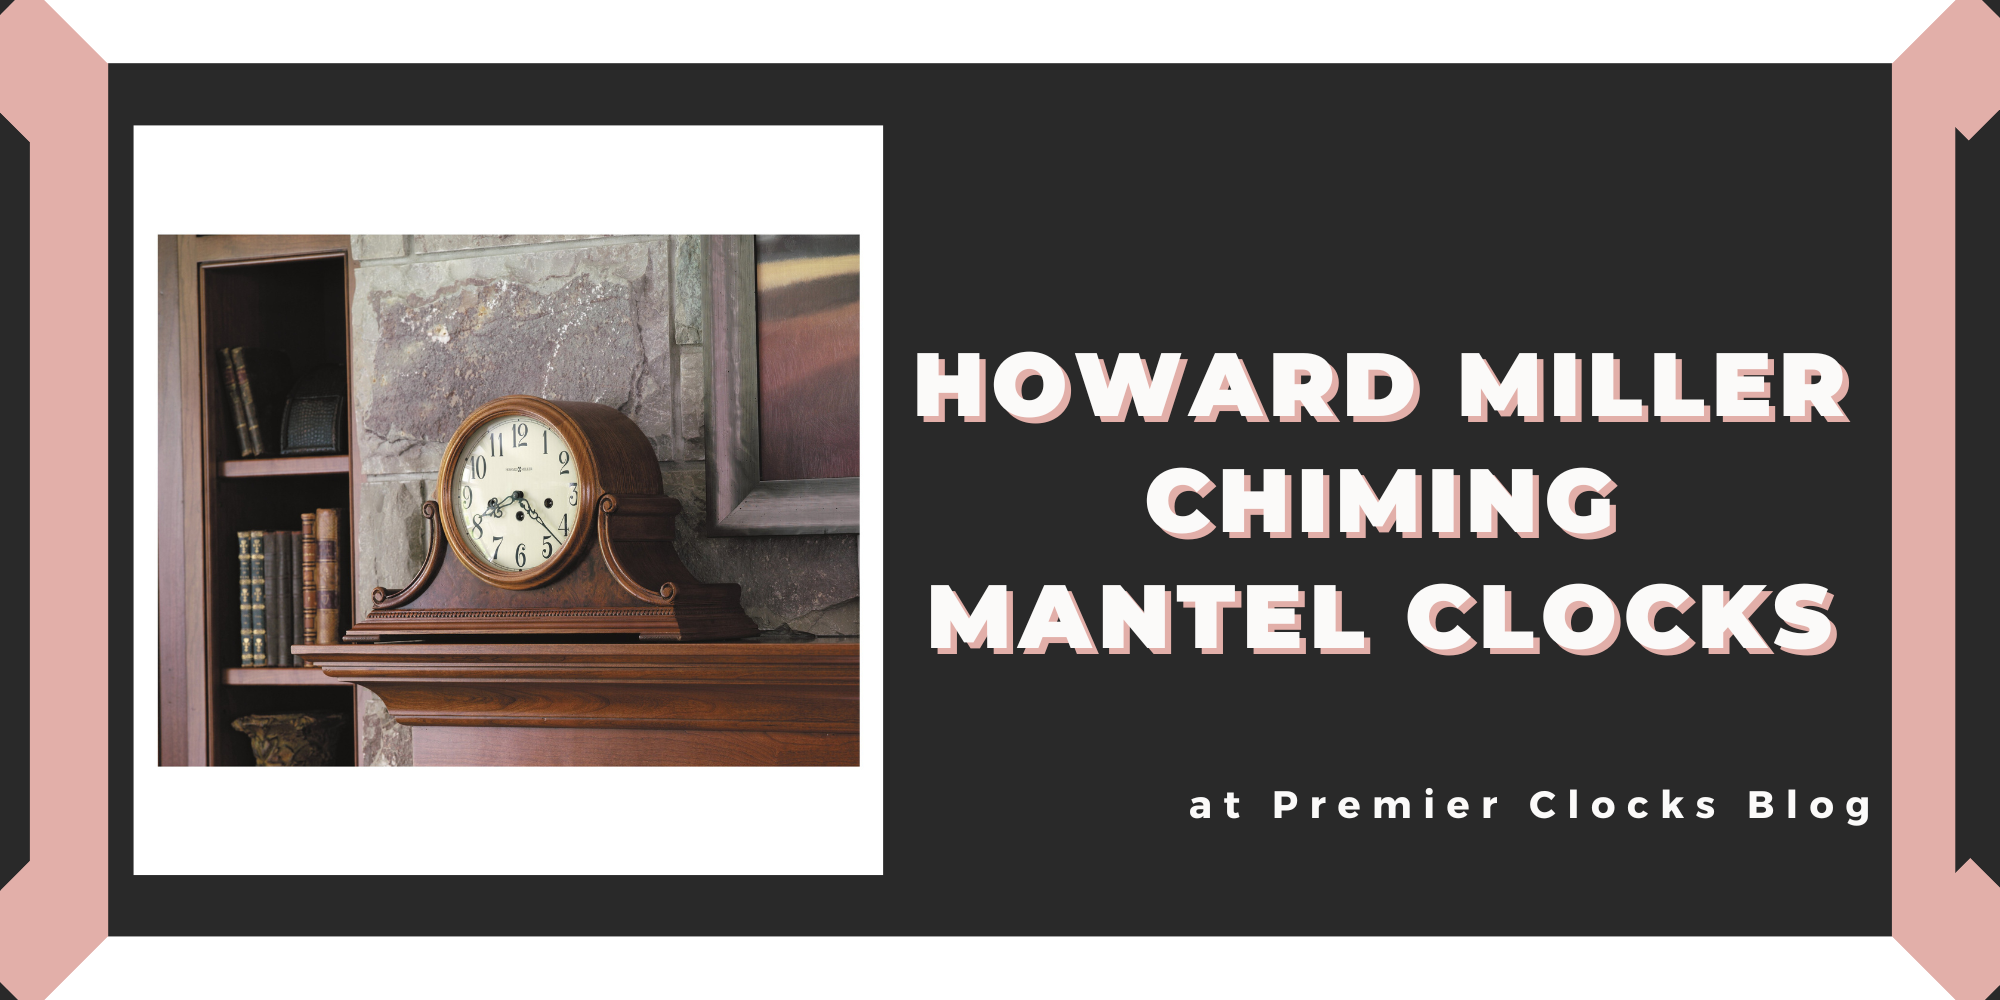 Howard Miller Chiming Mantel Clocks - Premier Clocks